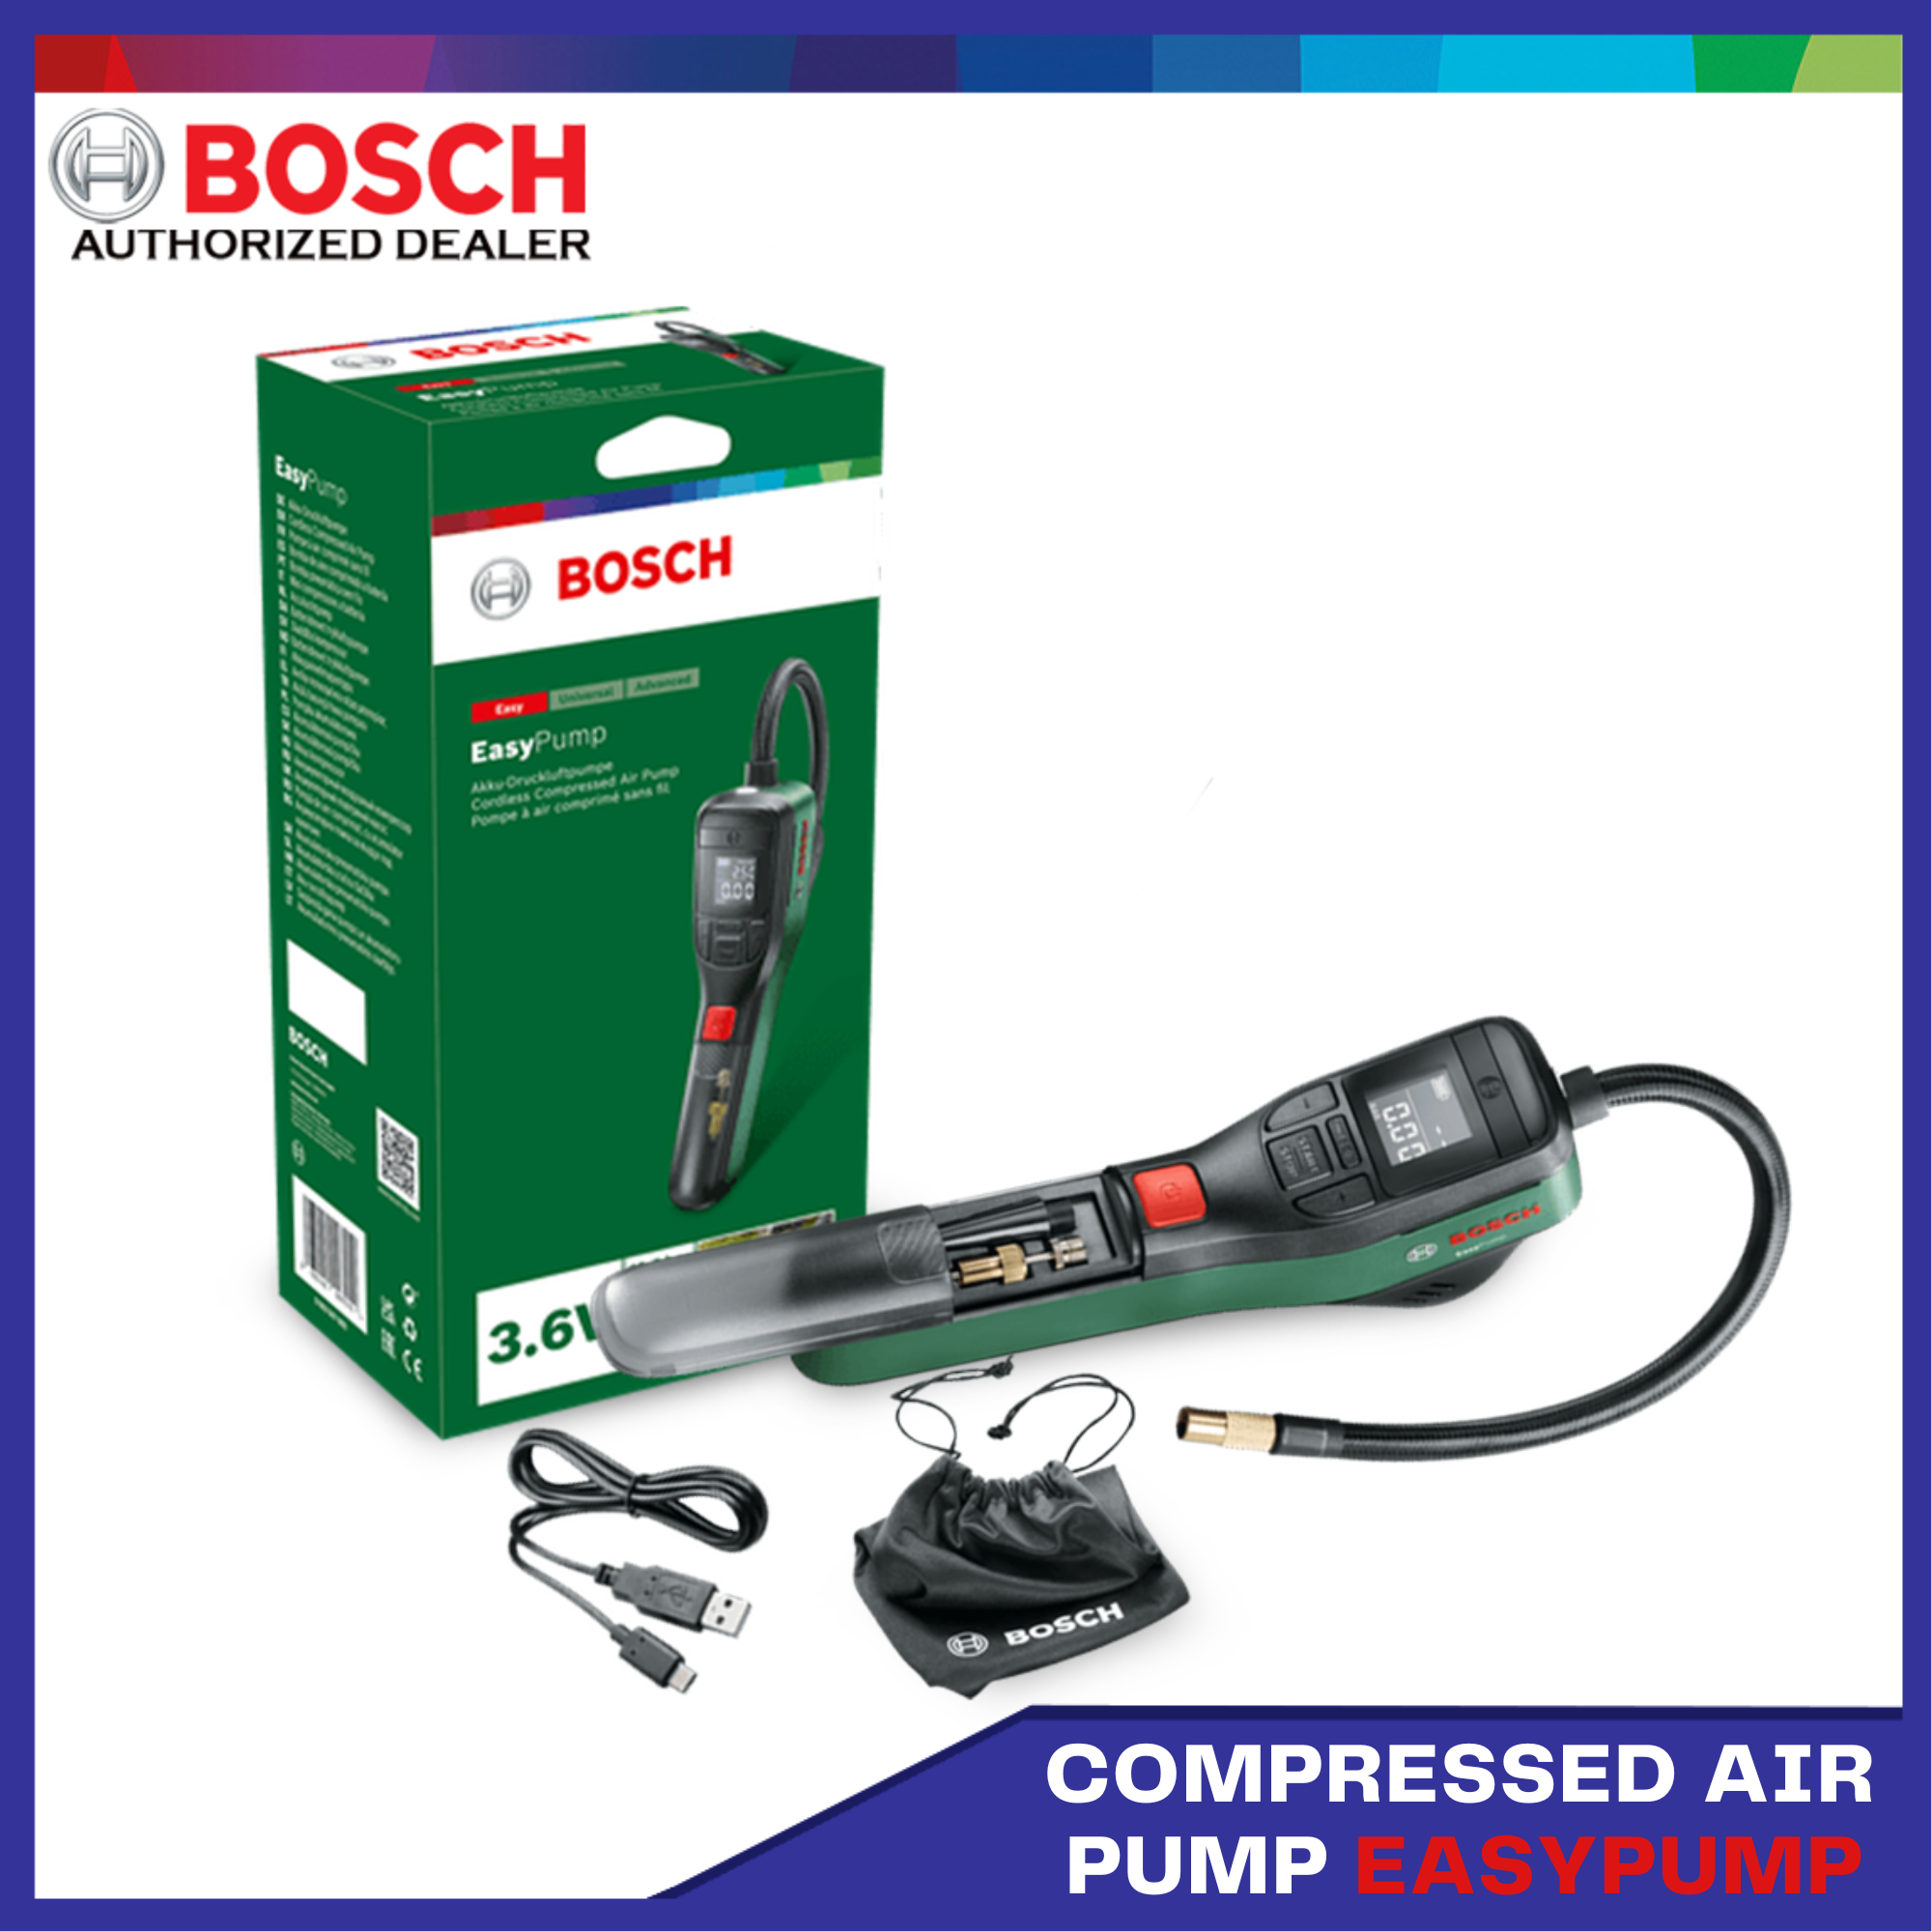 BOSCH Easy Pump mini compressor electric air pump